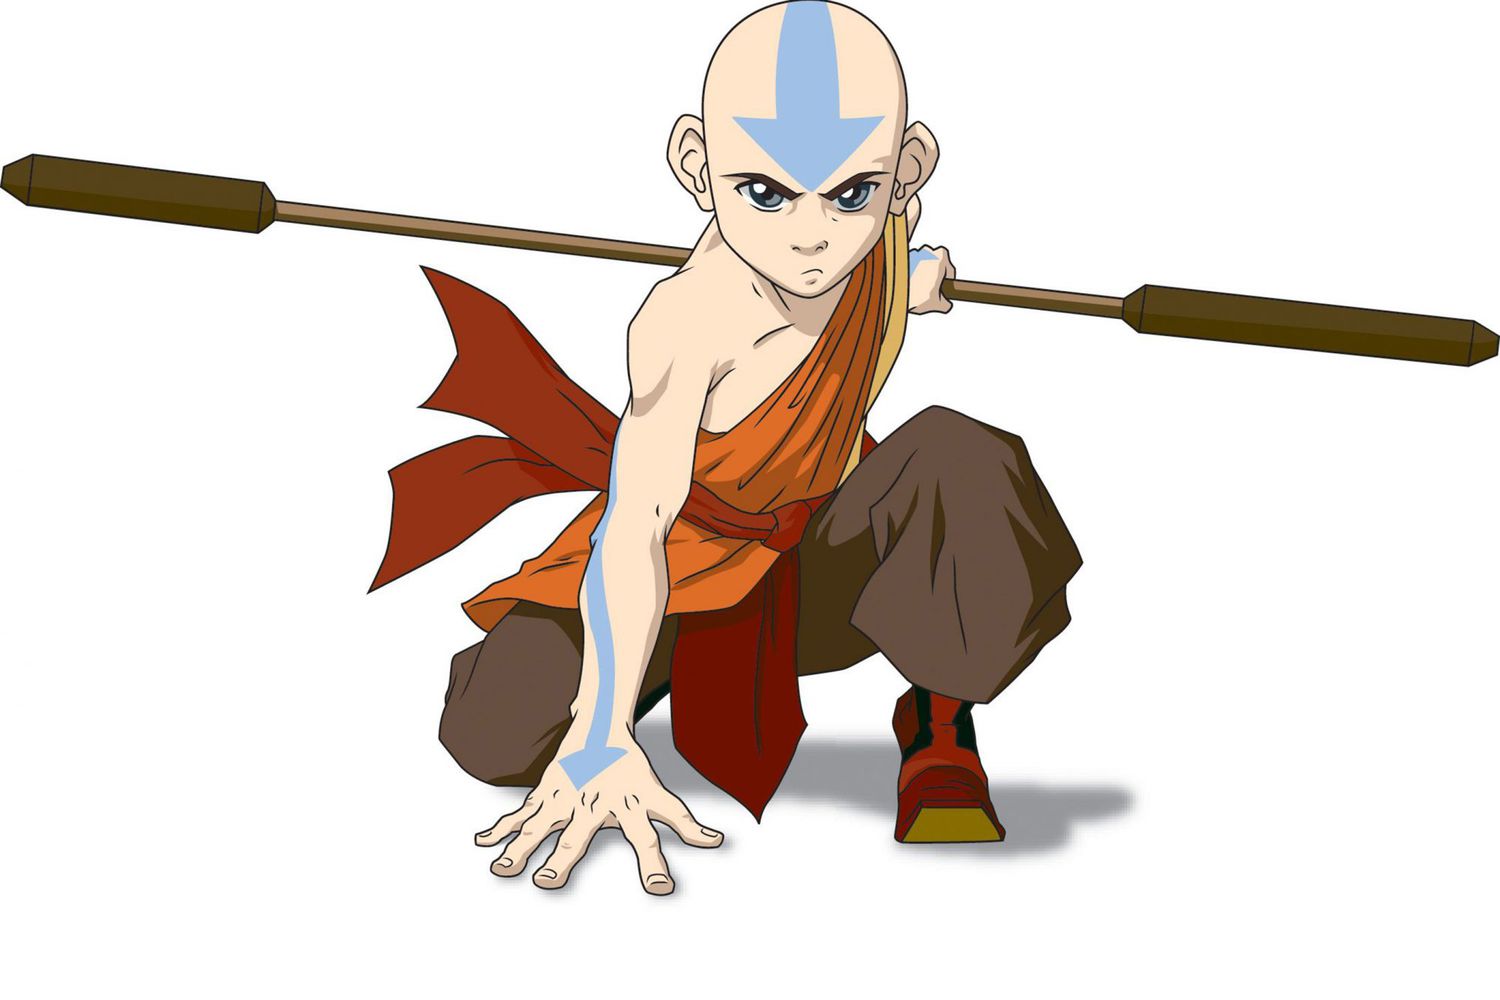 Animated Avatar on Behance